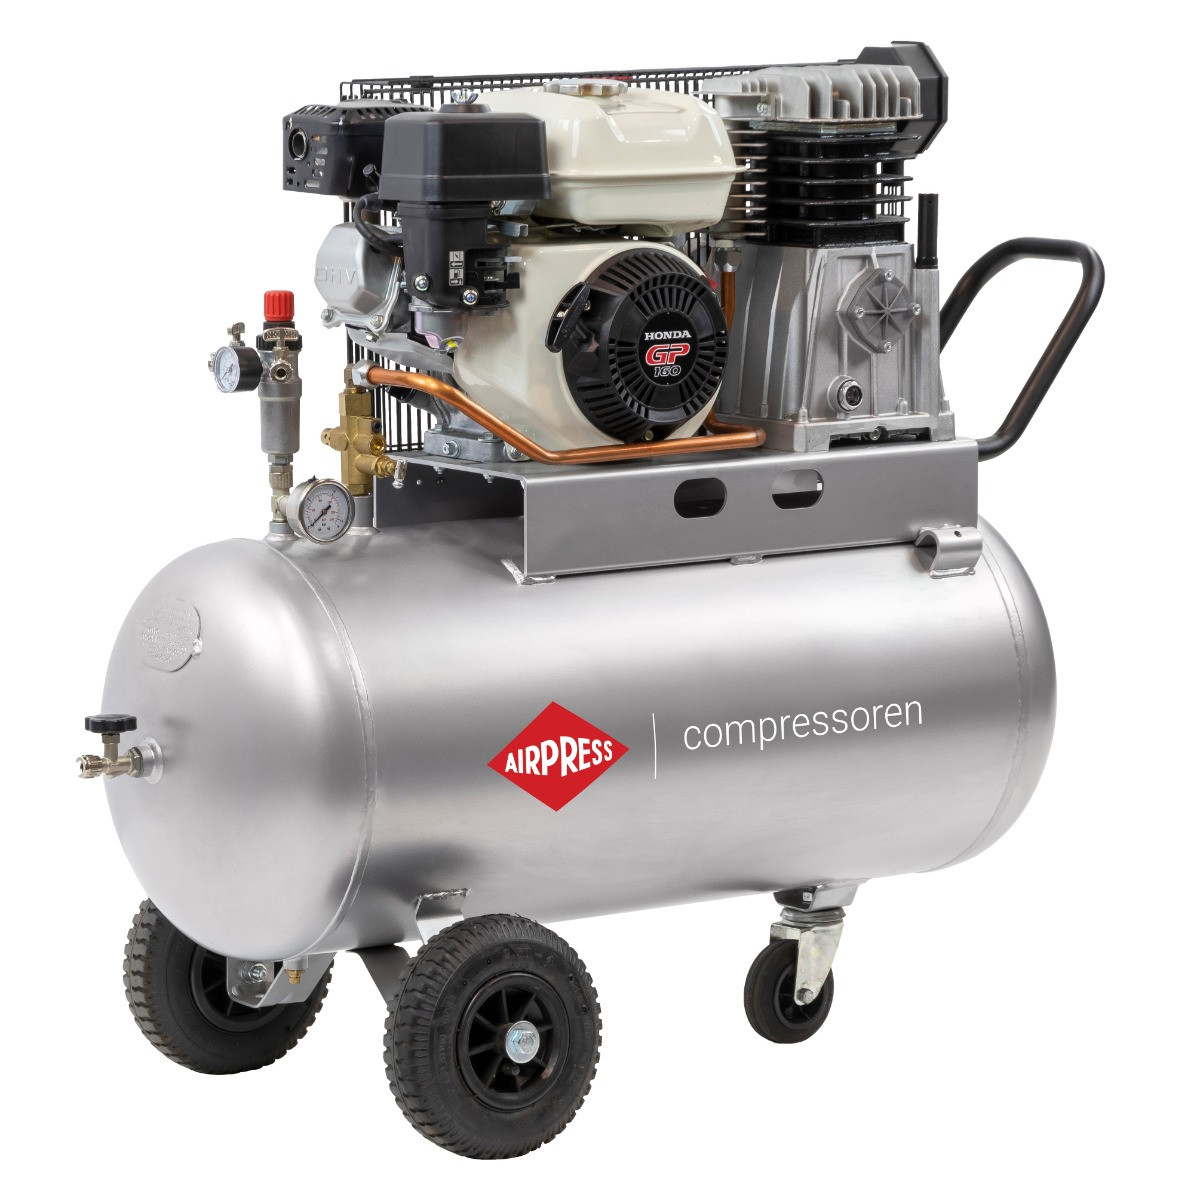 Compresor de aire de gasolina Airpress